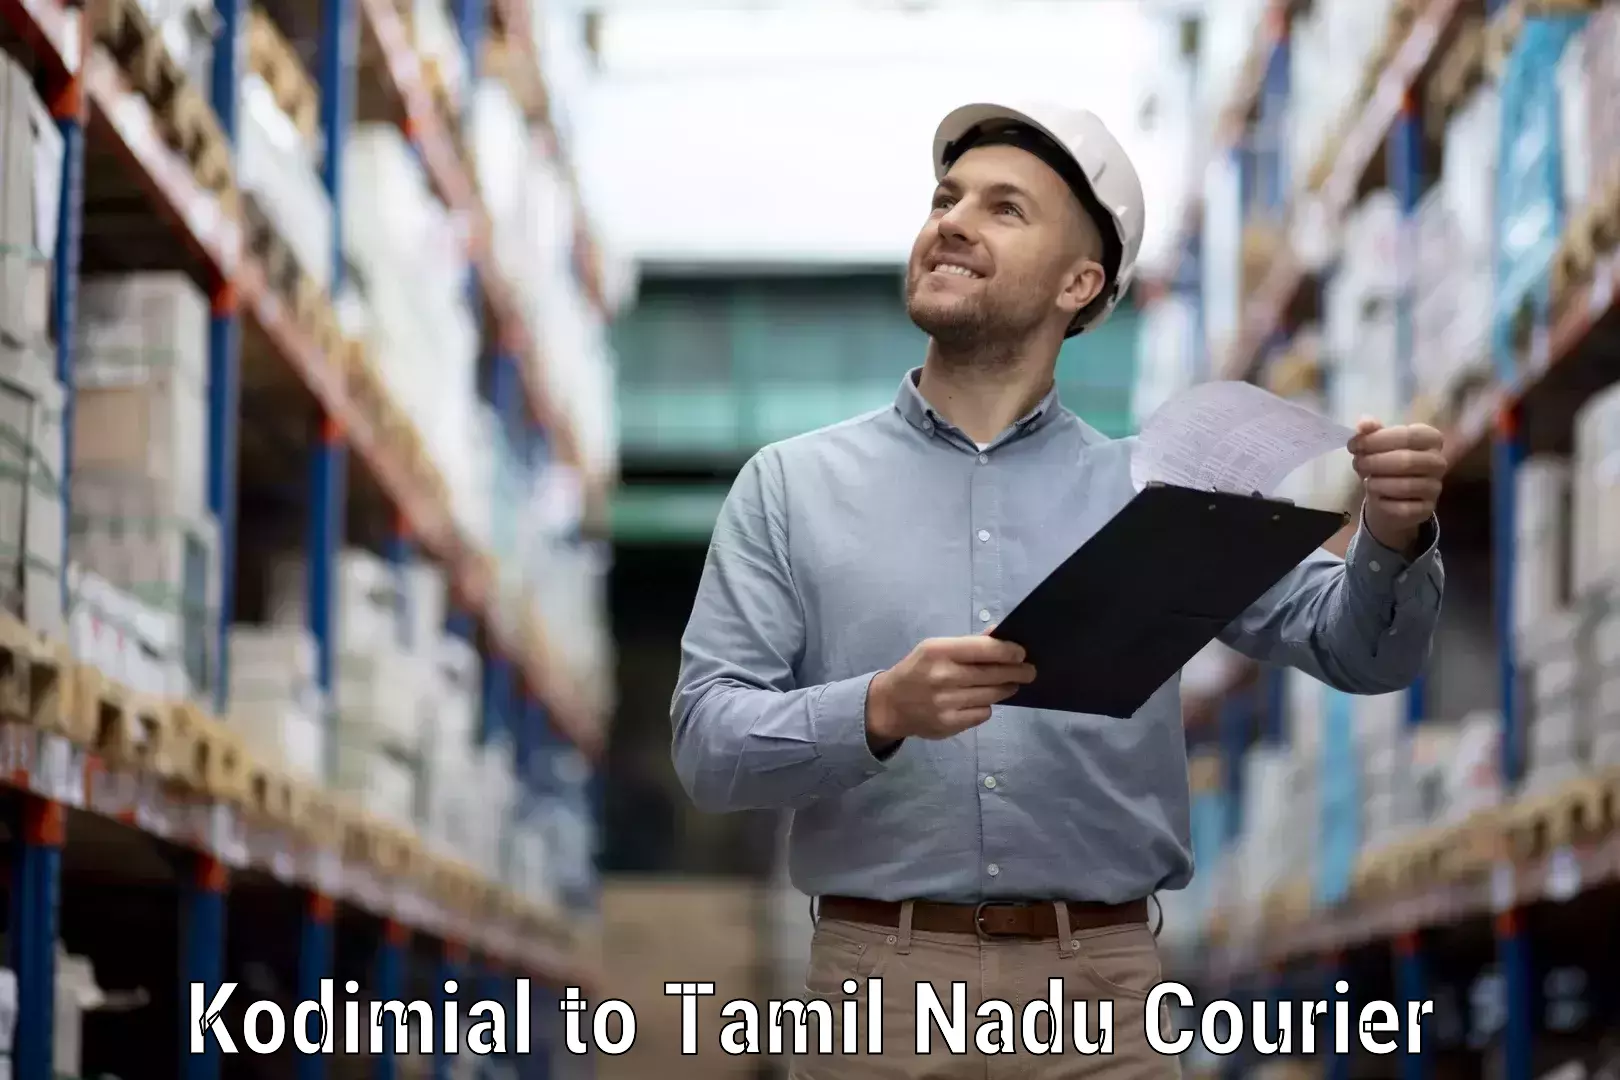 Courier service comparison in Kodimial to Manapparai